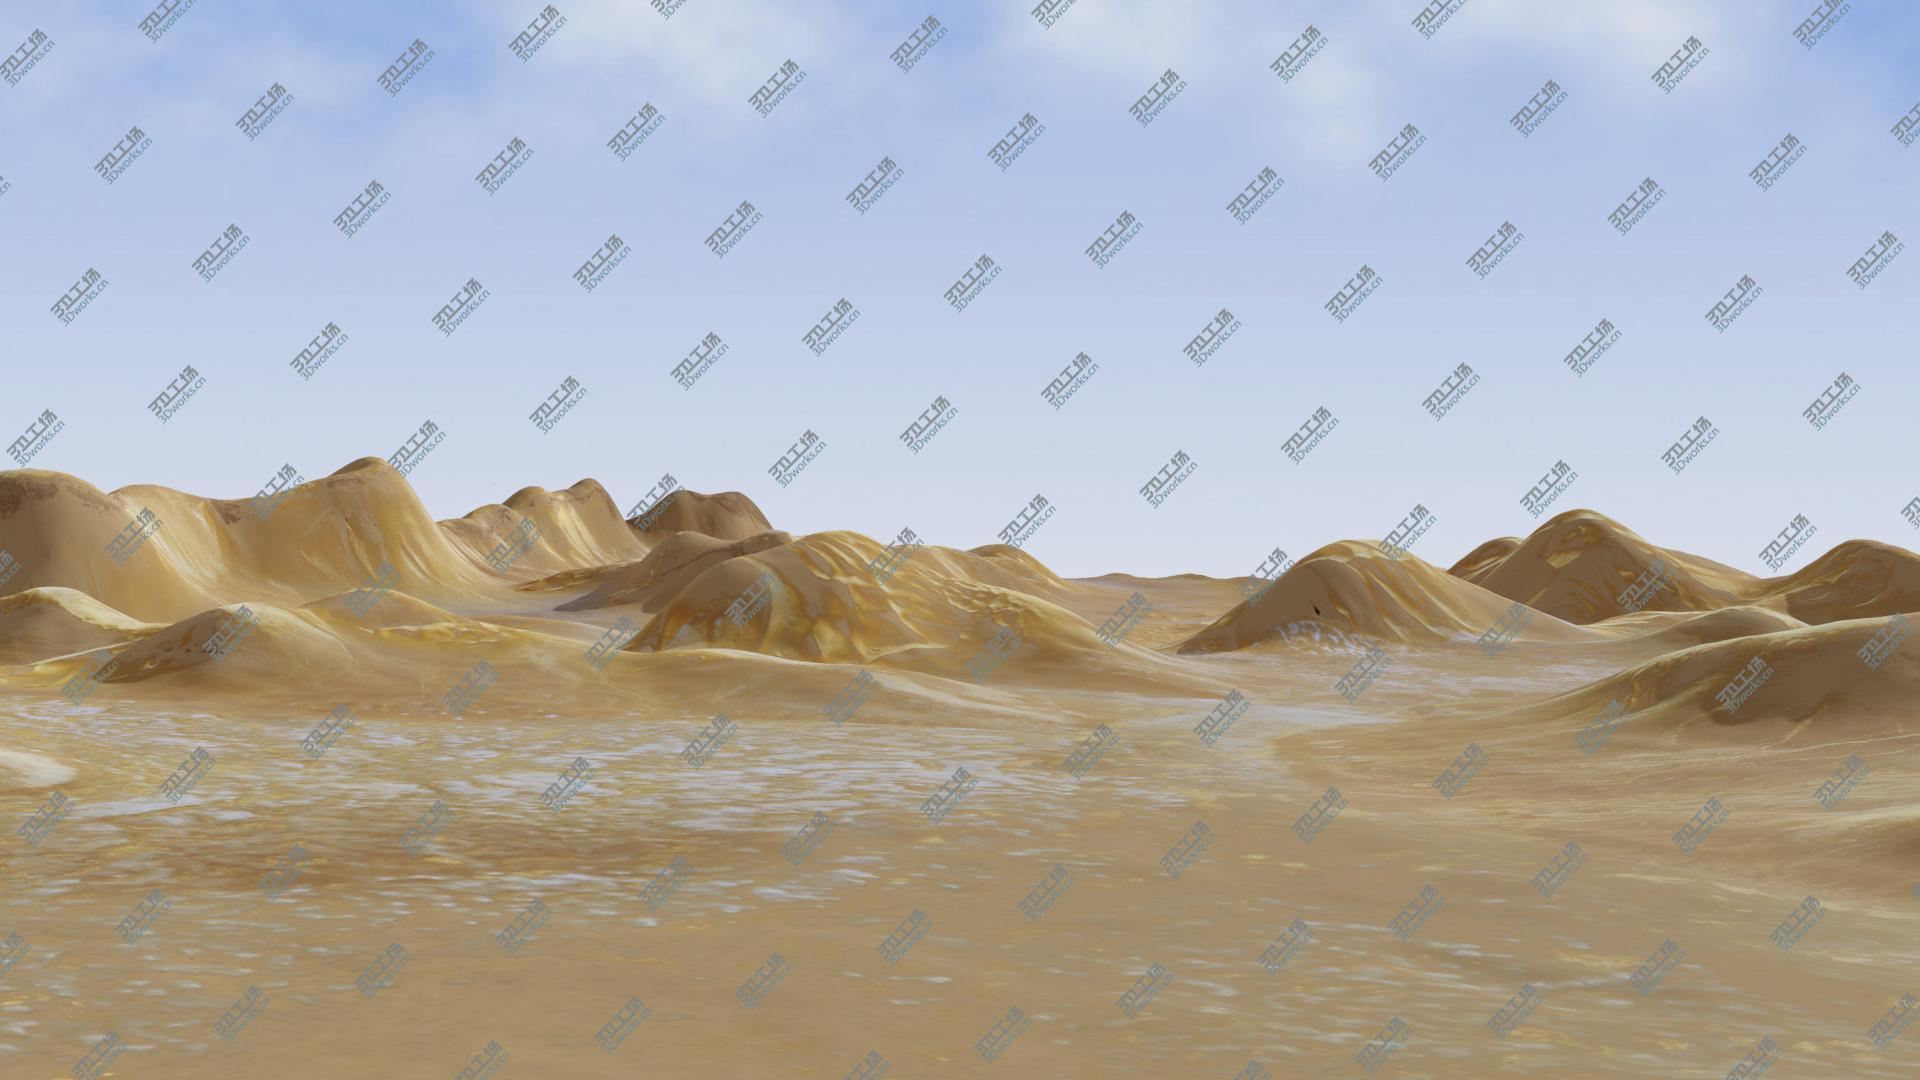 images/goods_img/202104091/Photorealistic Desert Valley and Mountain Range model/5.jpg